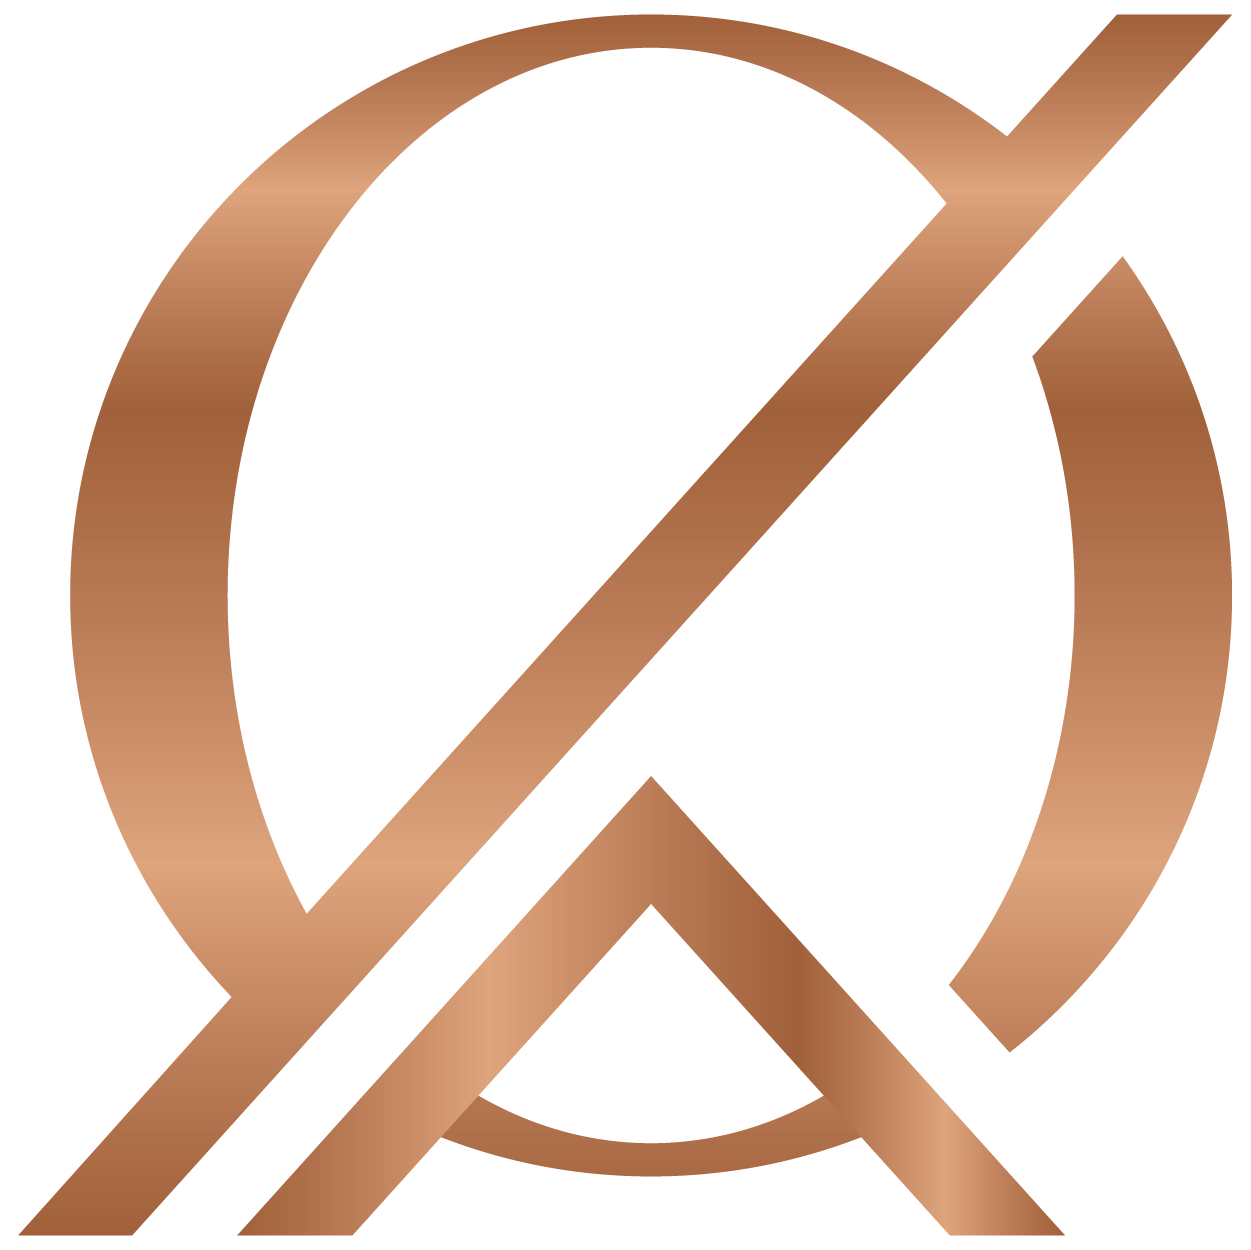 Østli eiendomsmegling logo